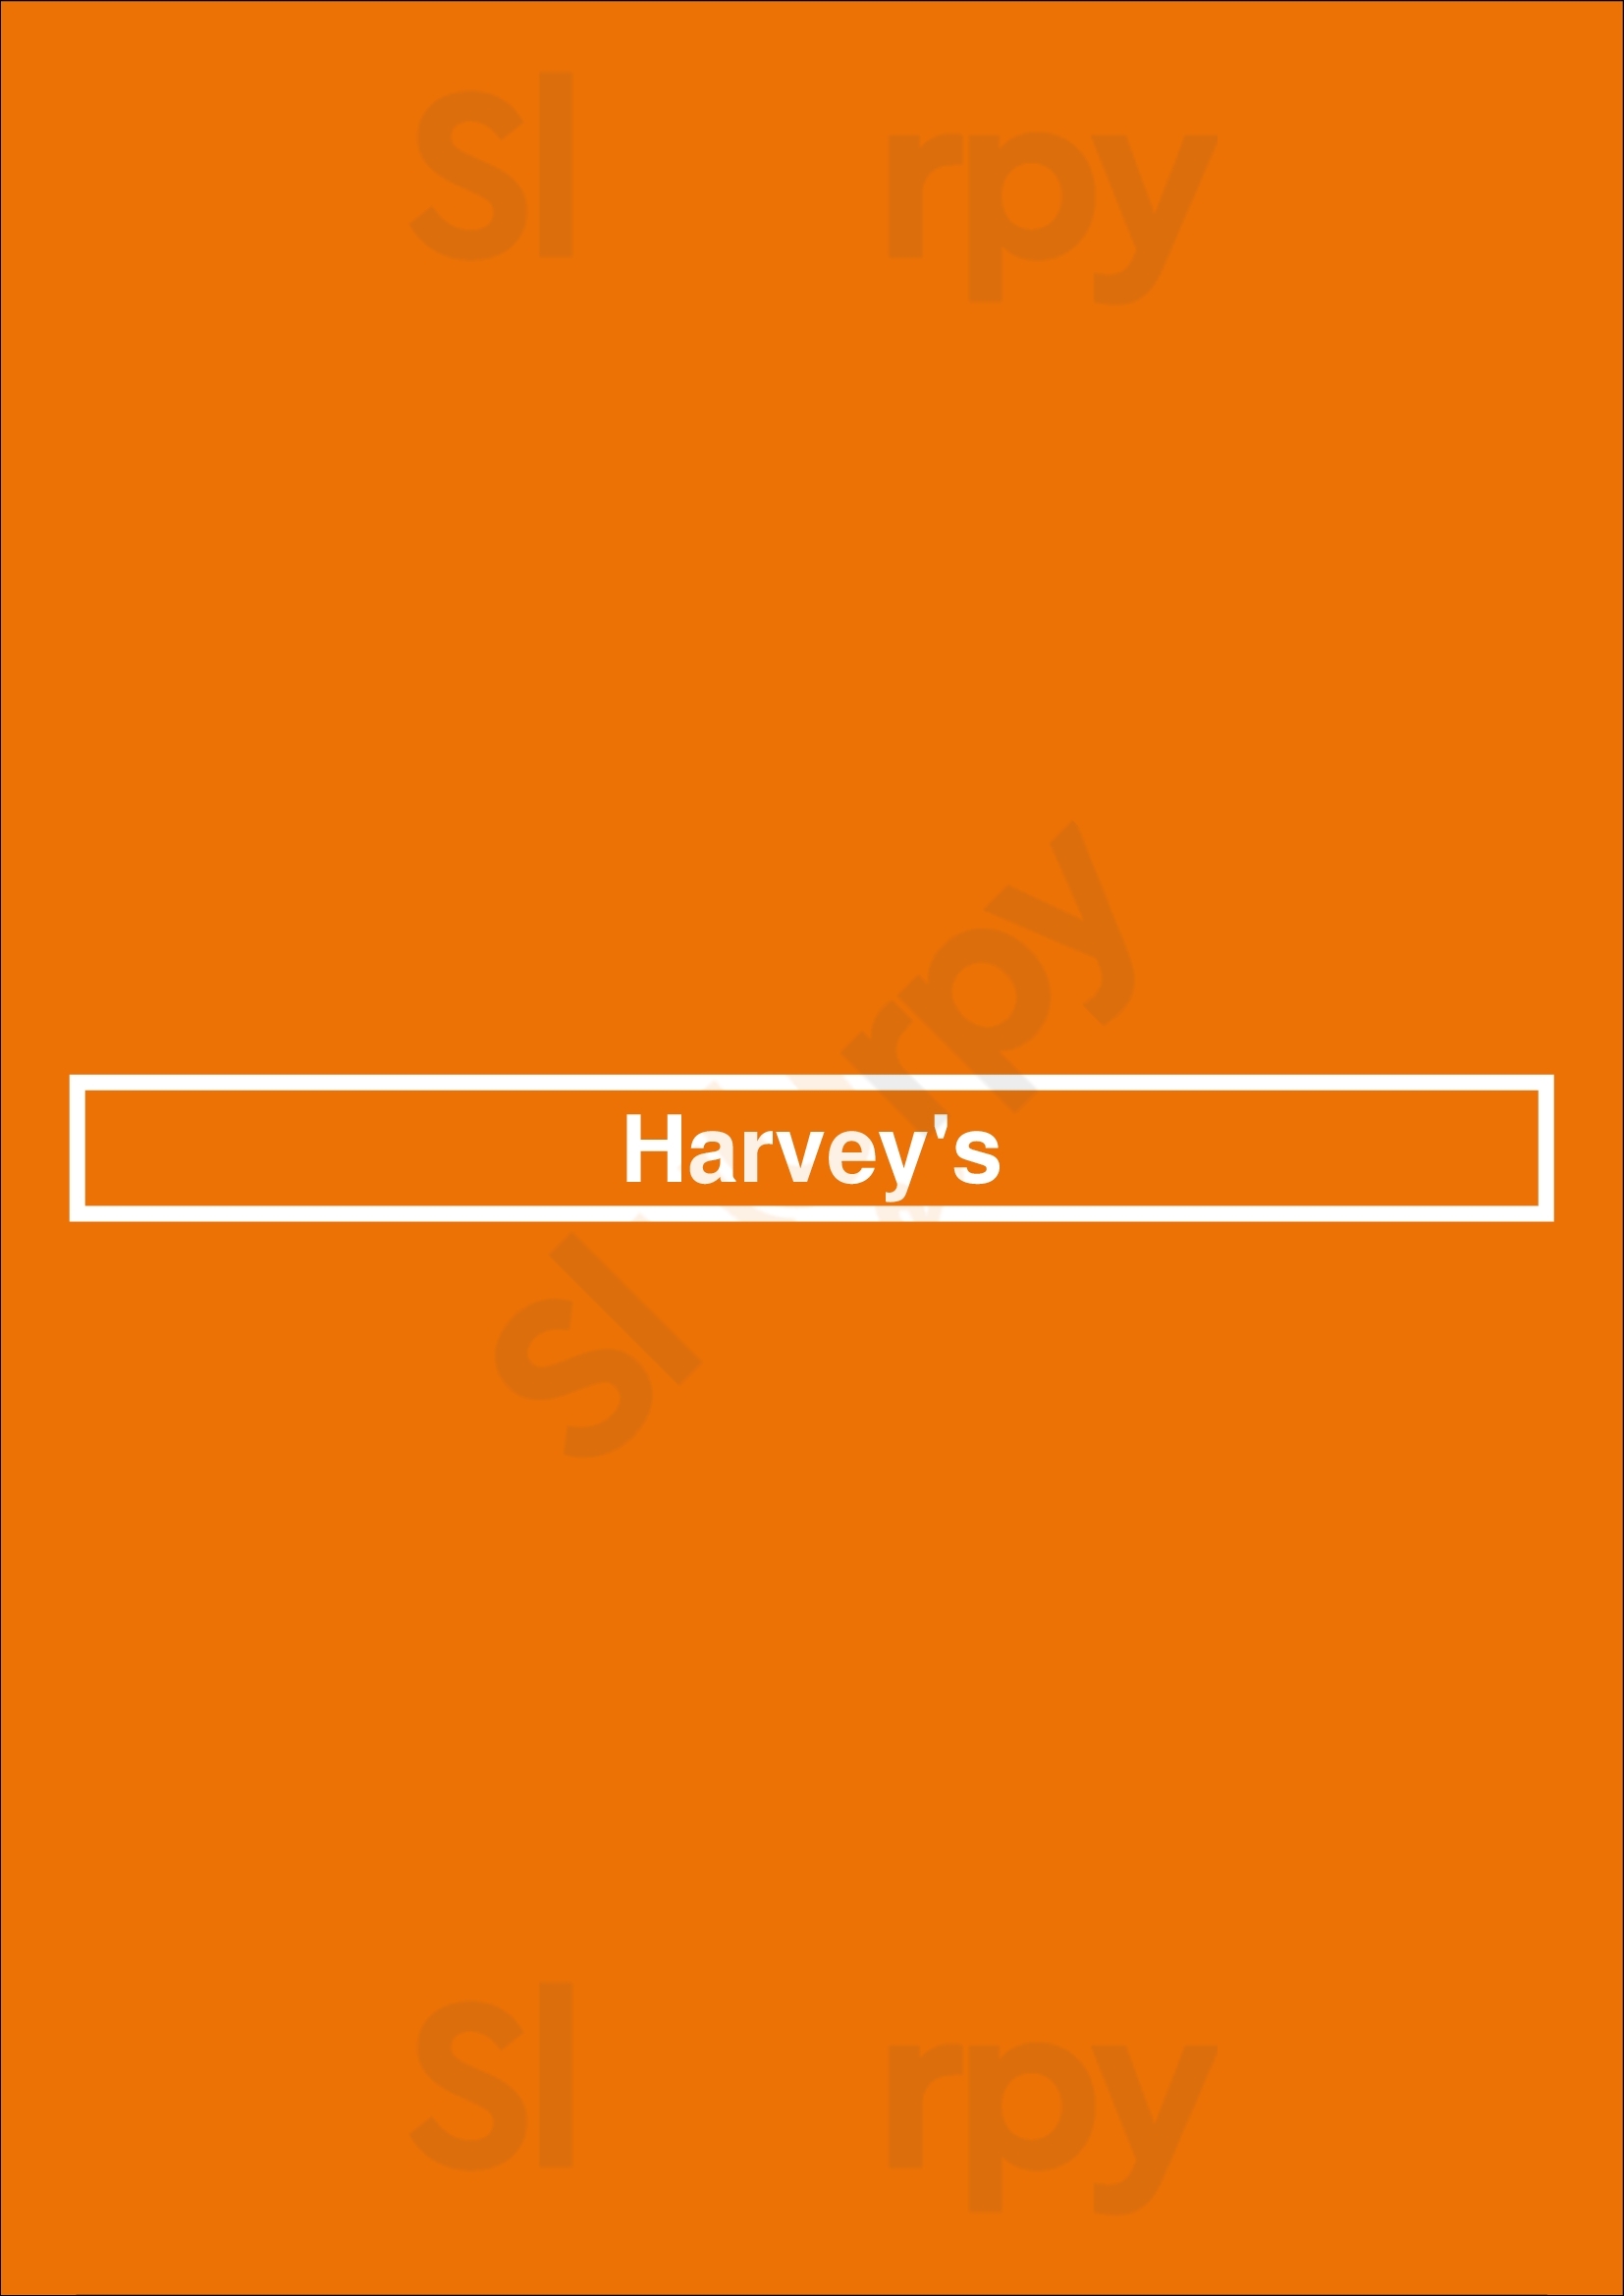 Harvey's Kingston Menu - 1